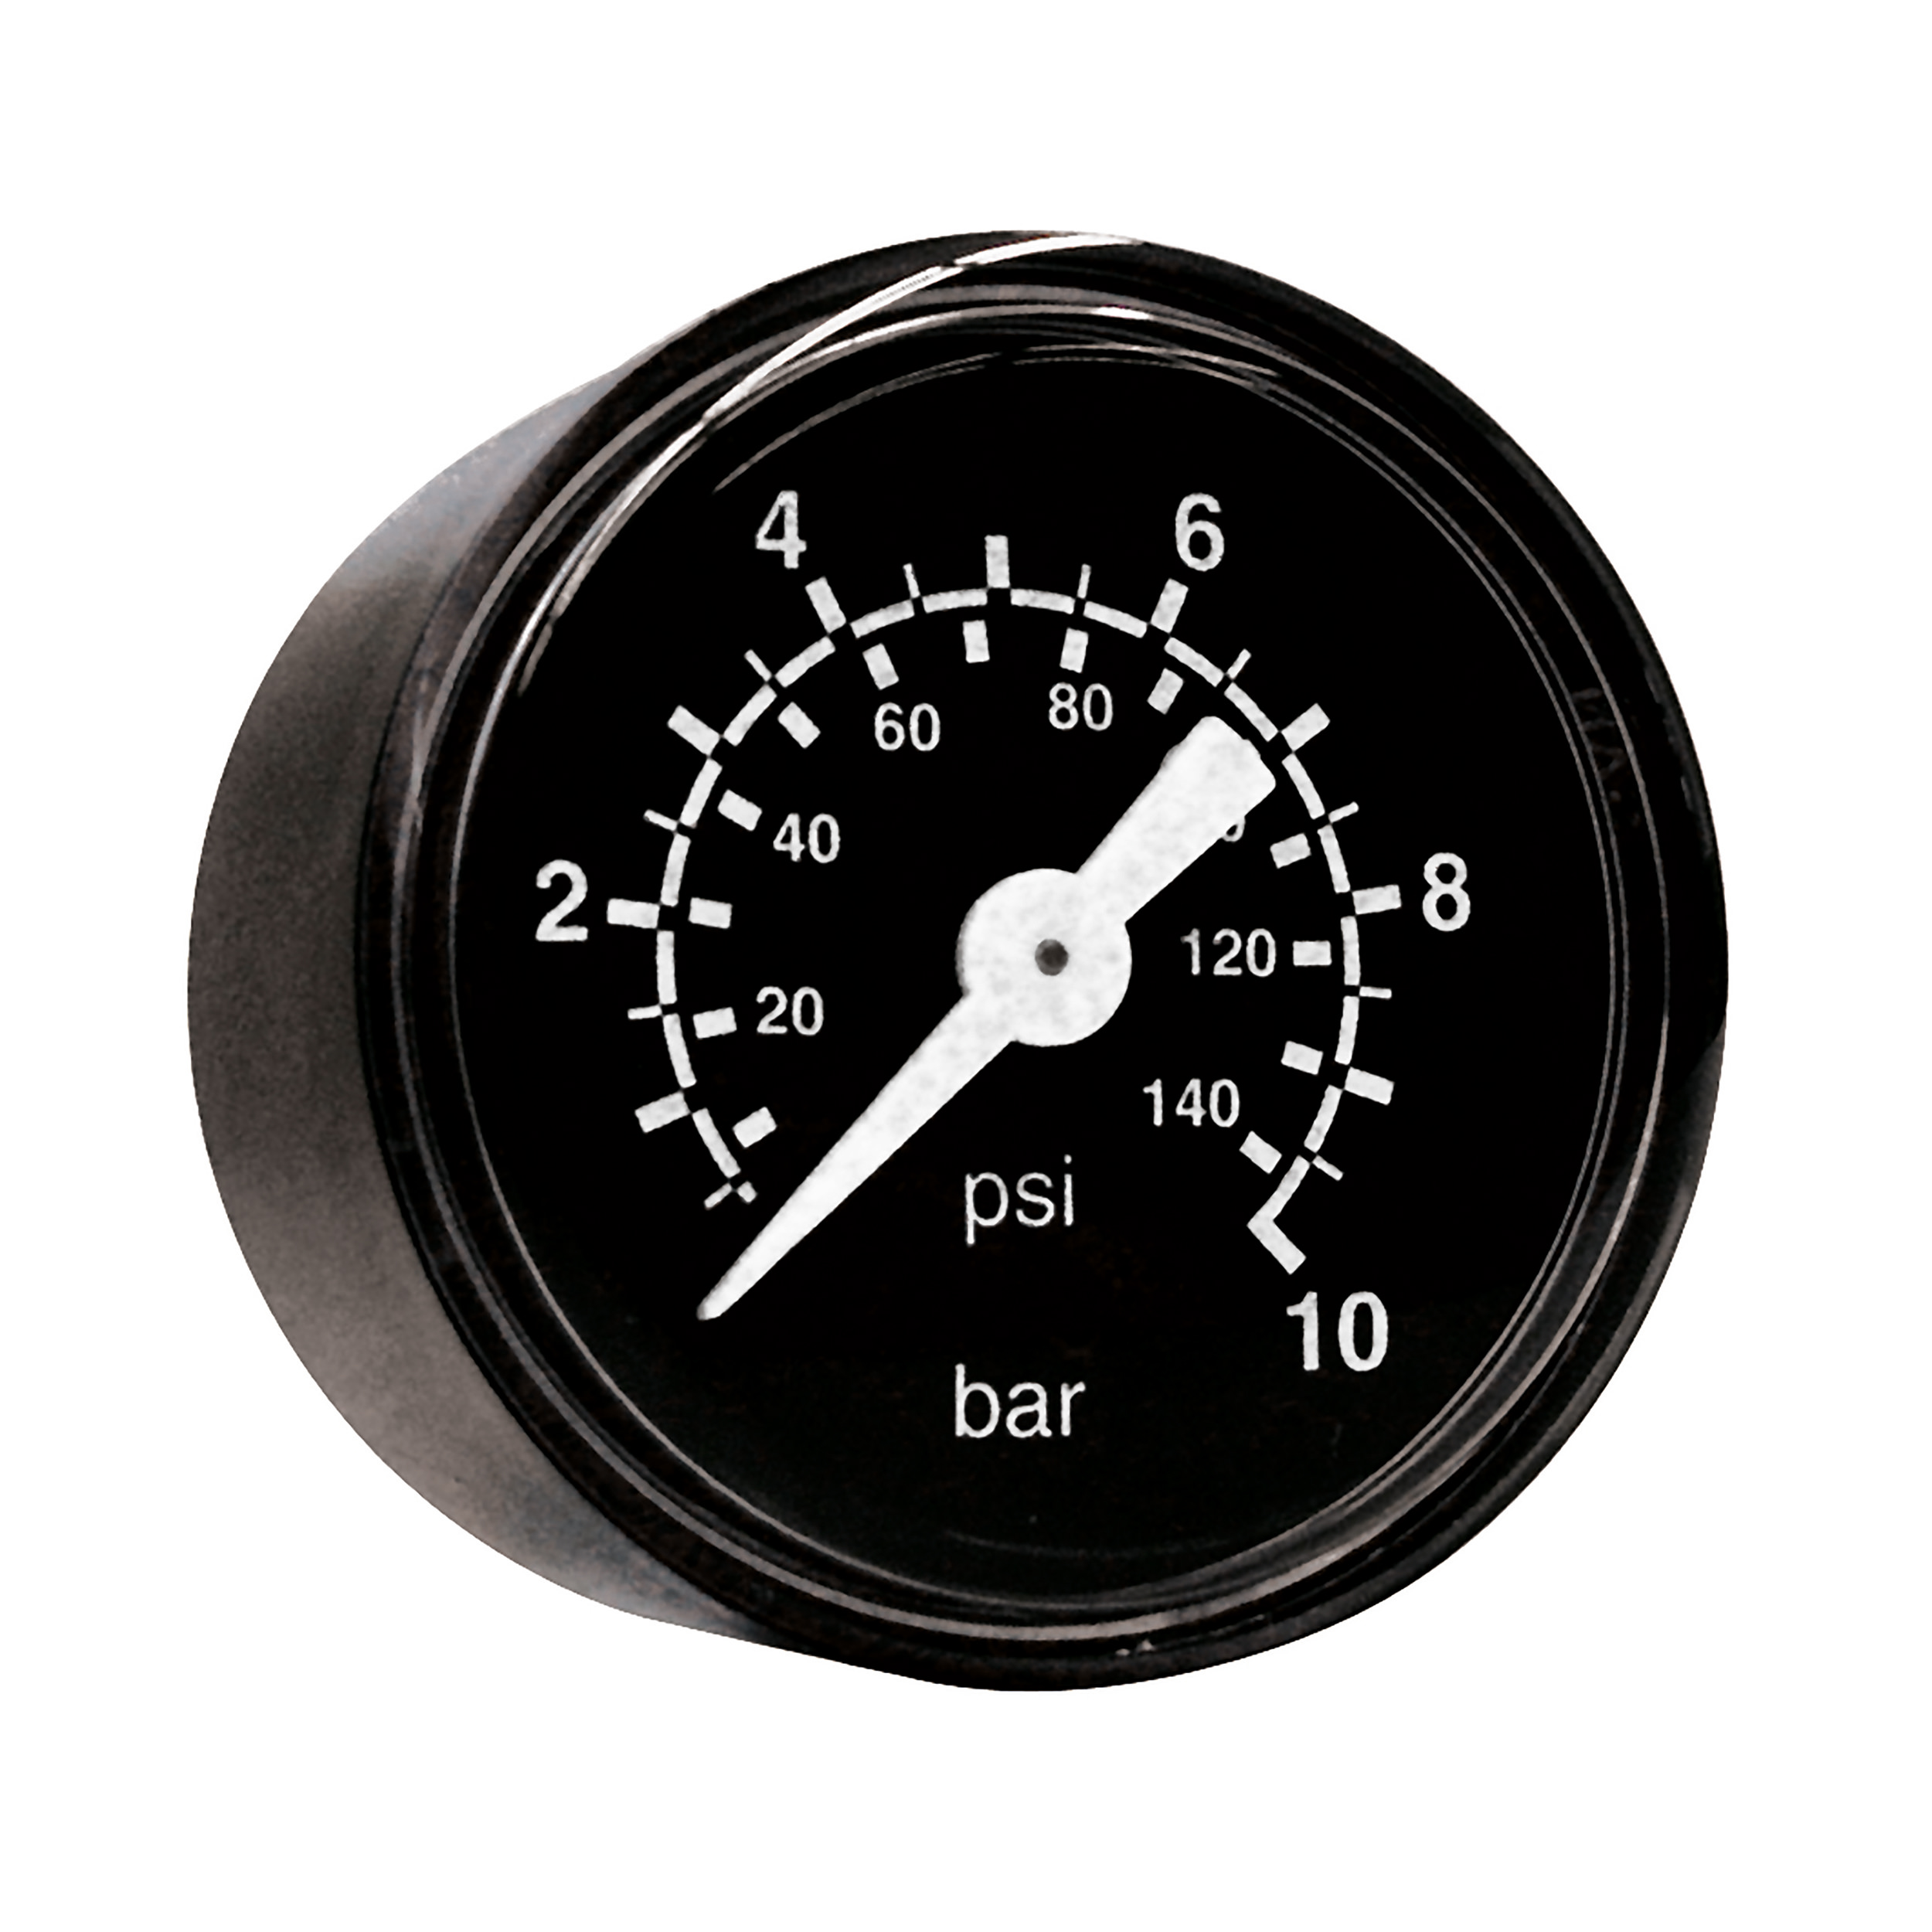 Bourdon-tube gauge Ø40, class 2.5, base/imprint: black/white, horizontal connection: G⅛, display range: 0–145 psi